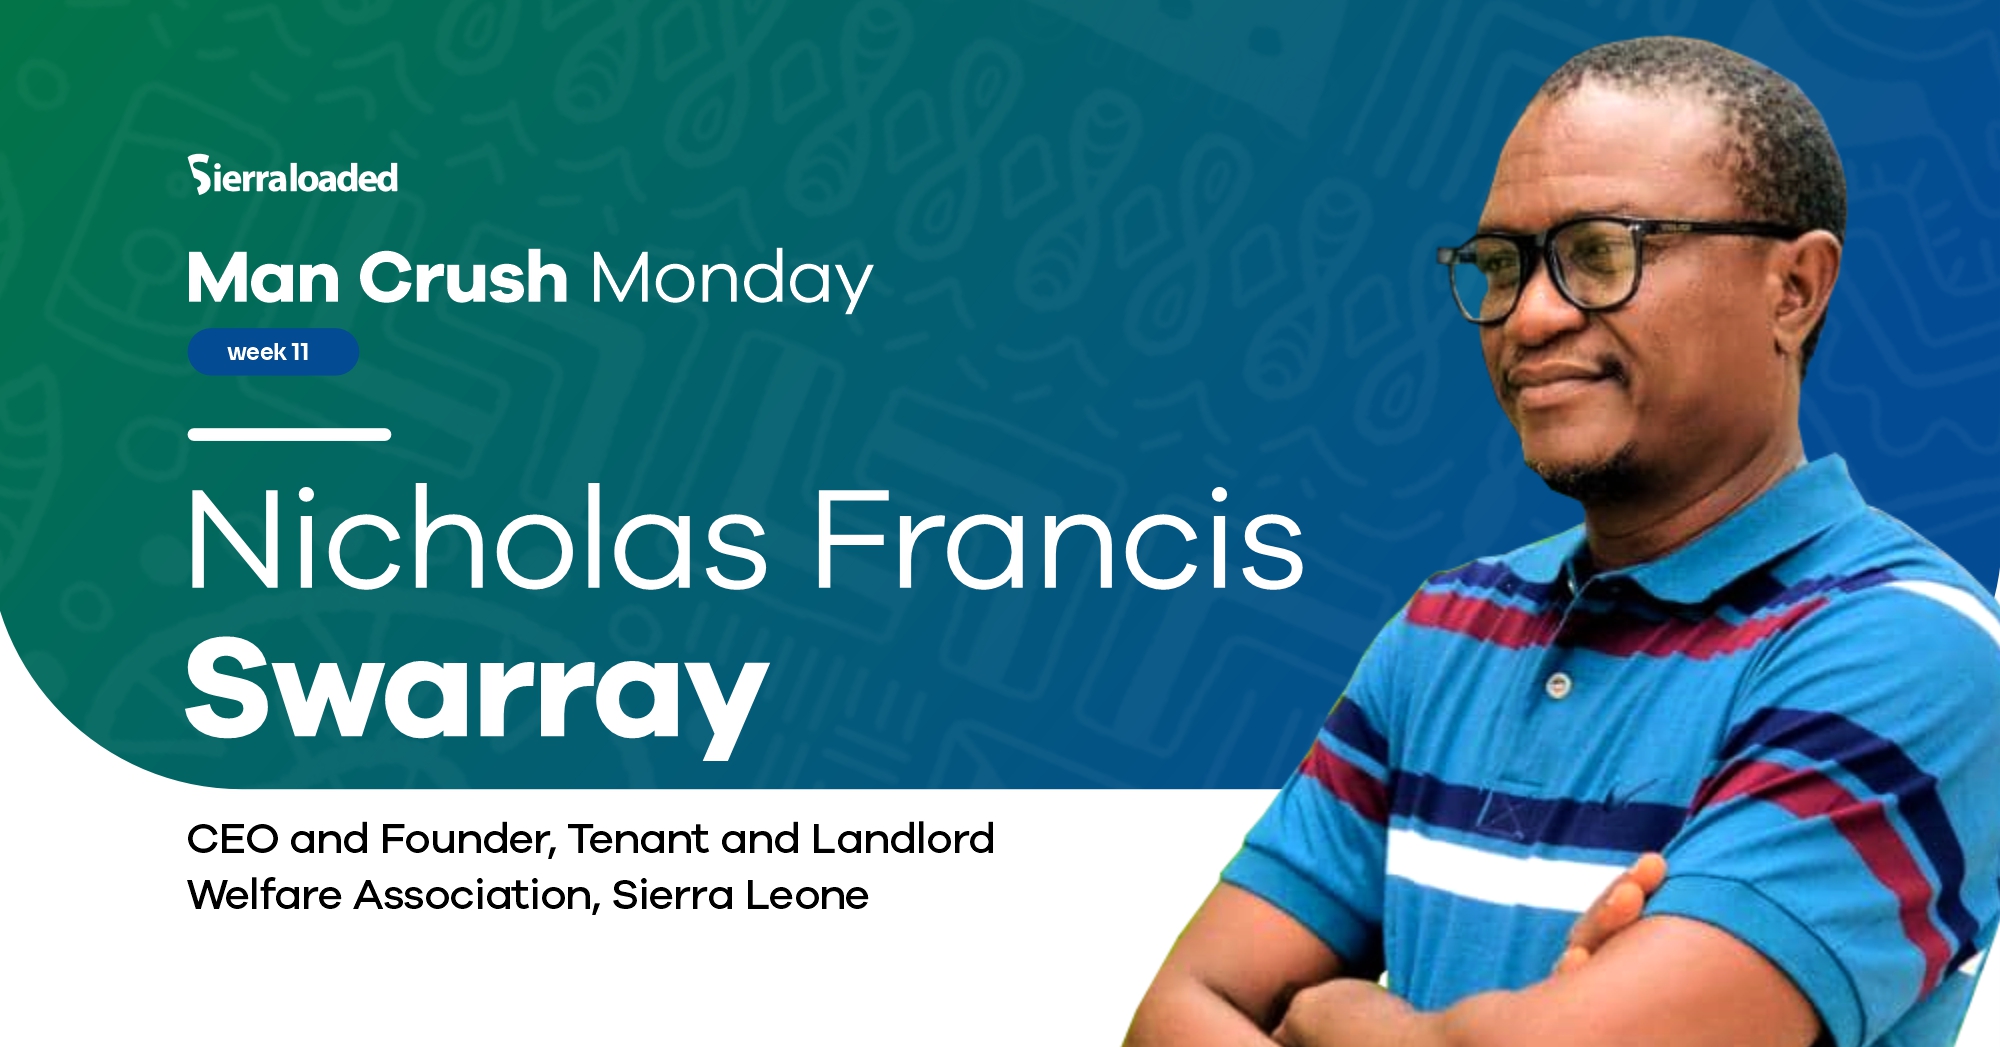 Meet Nicholas Francis Swarray, Sierraloaded Man Crush Monday